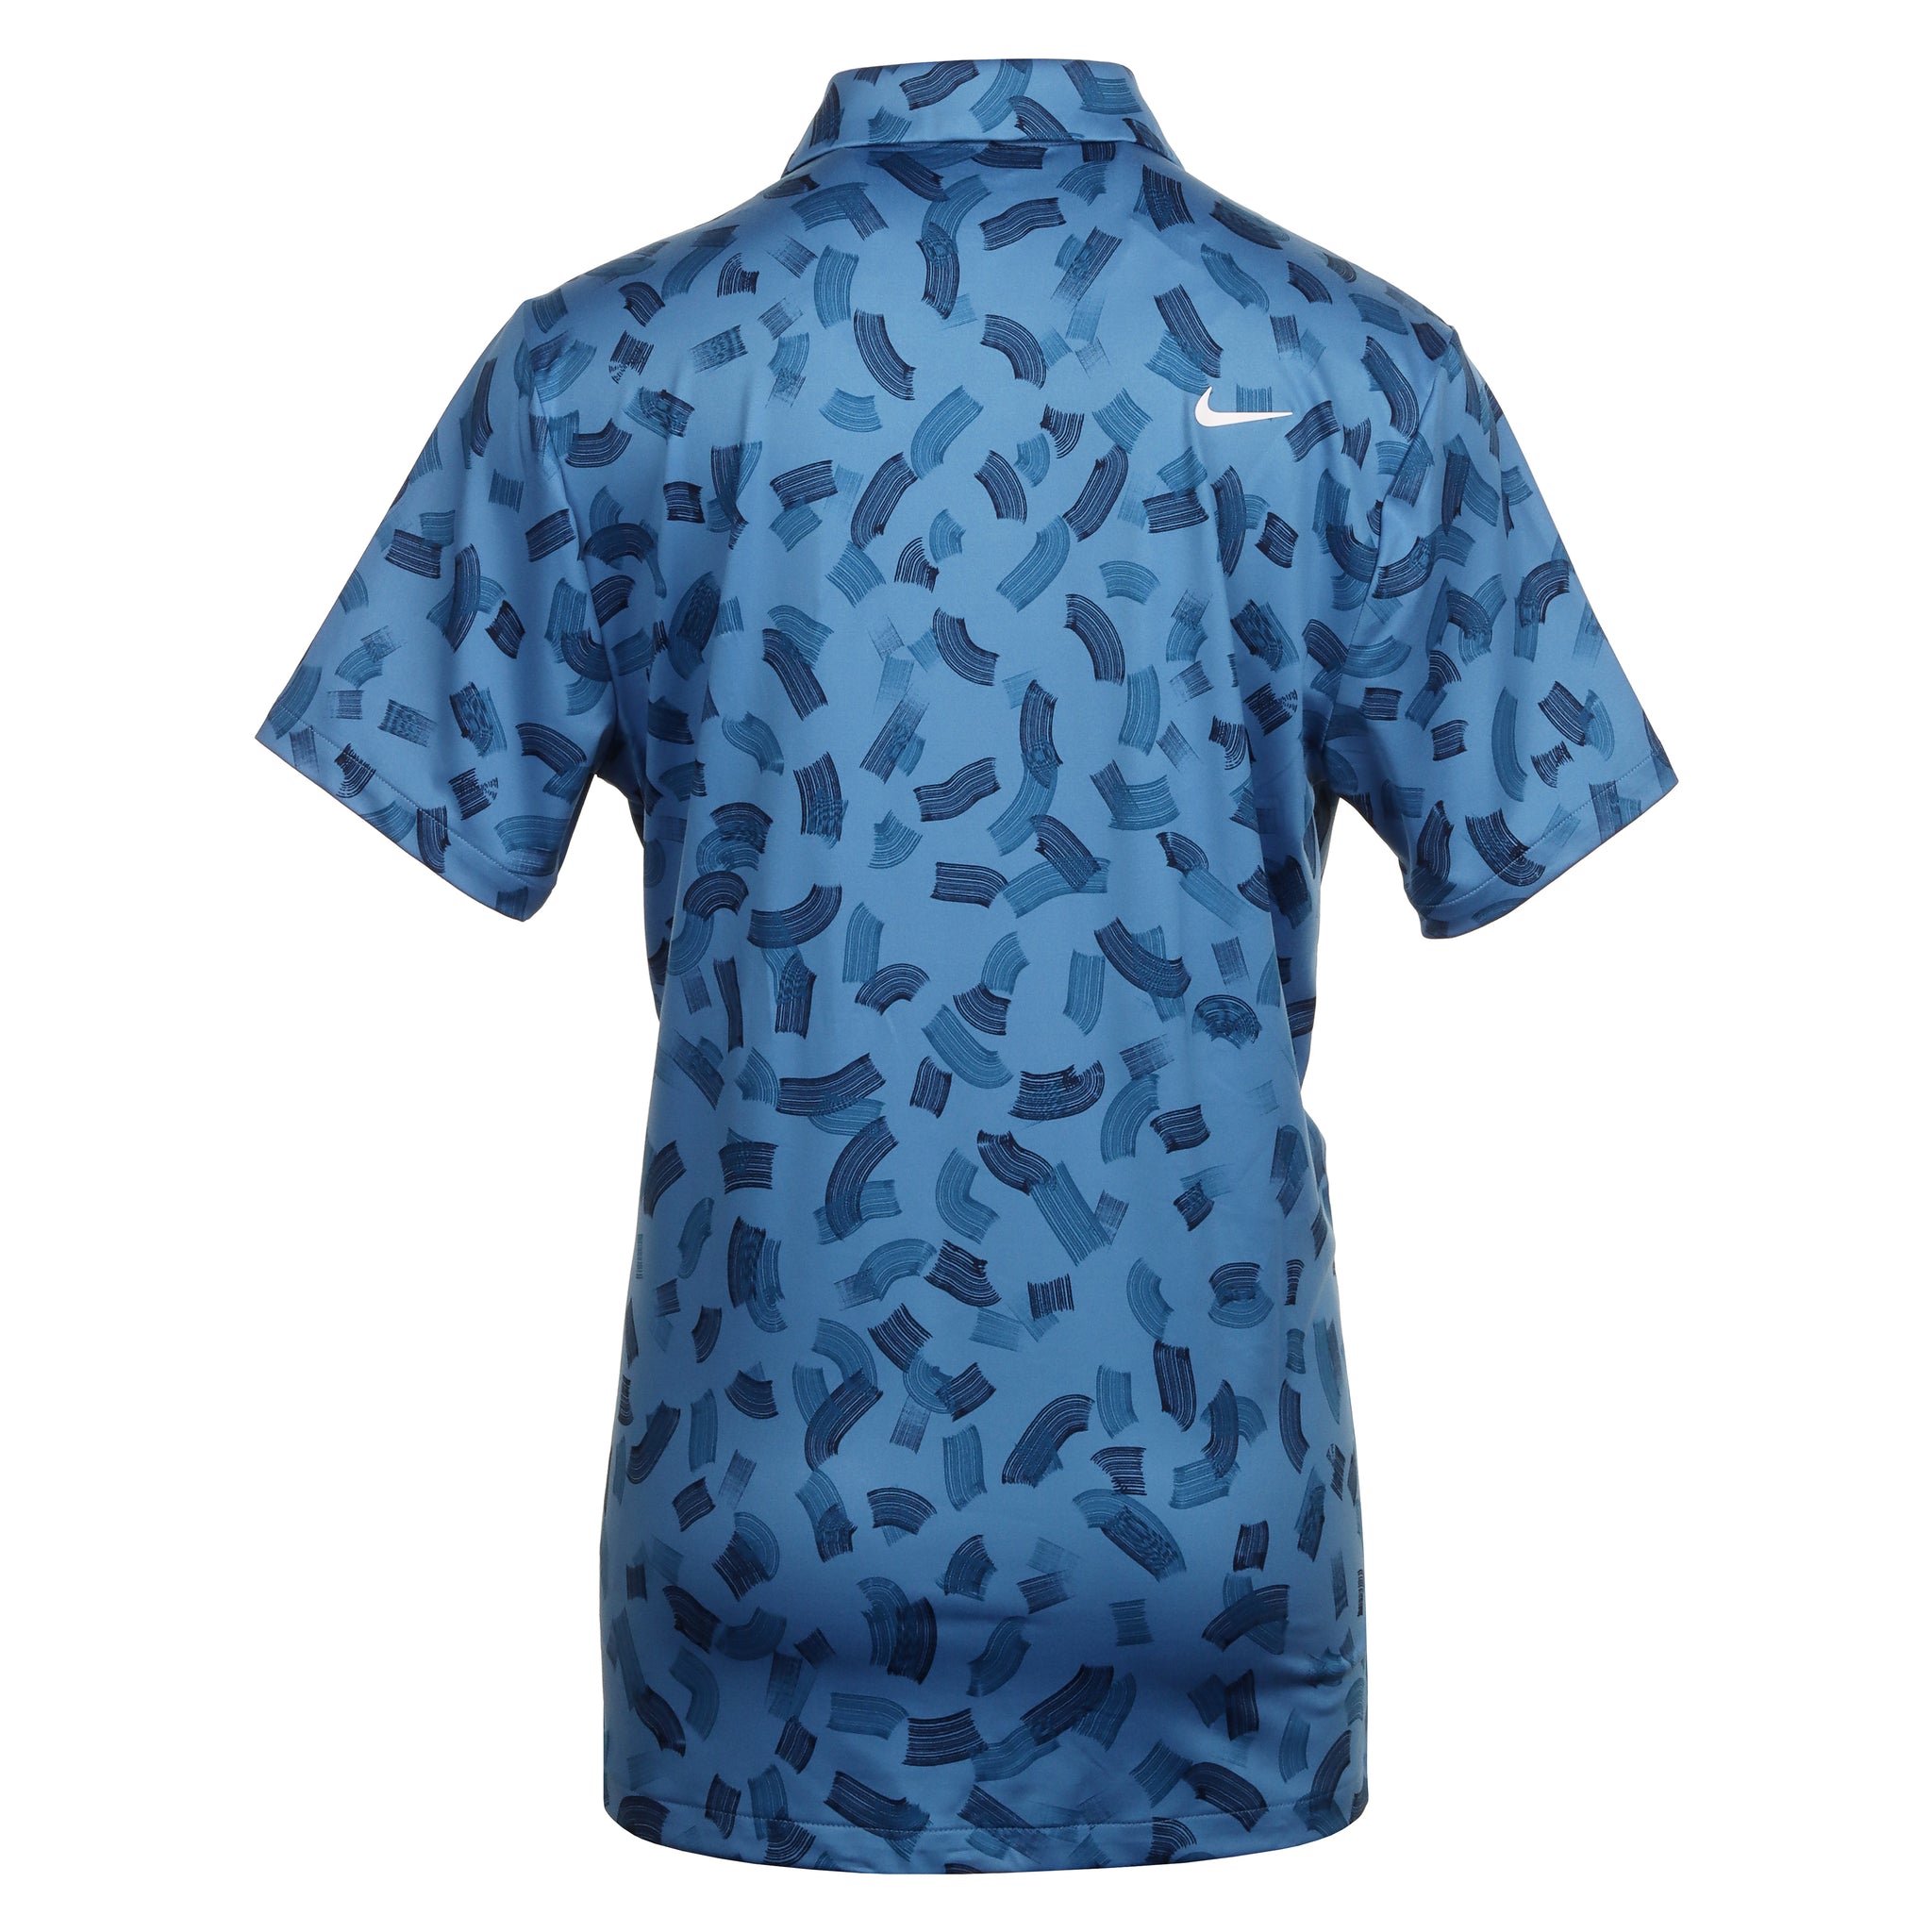 nike-golf-dri-fit-tour-micro-print-shirt-fd5735-402-star-blue